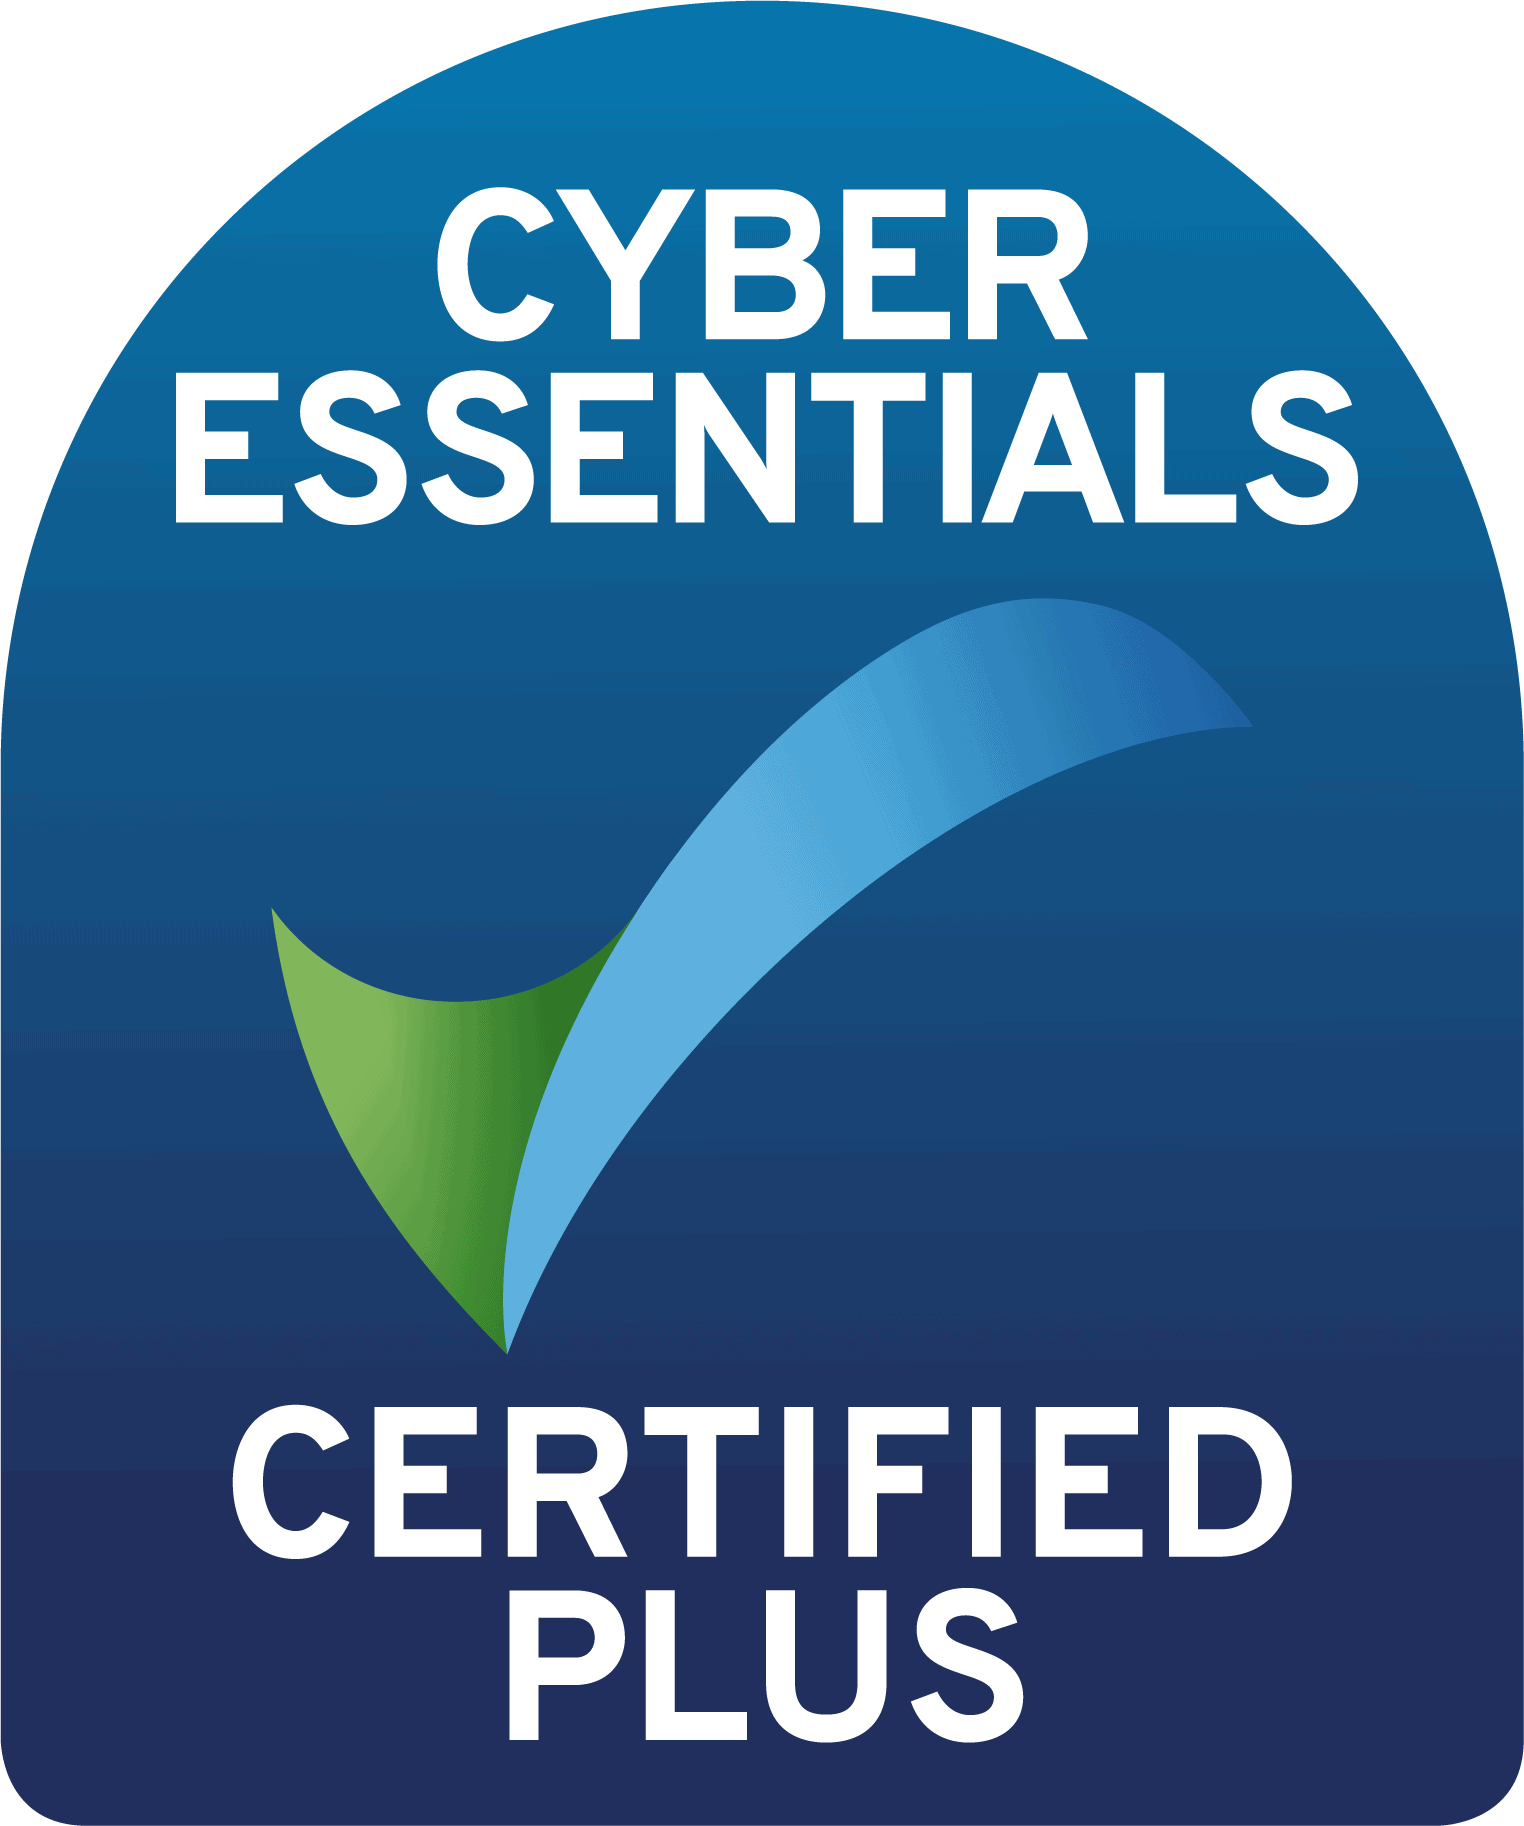 Cyber Essentials Certification Mark Plus